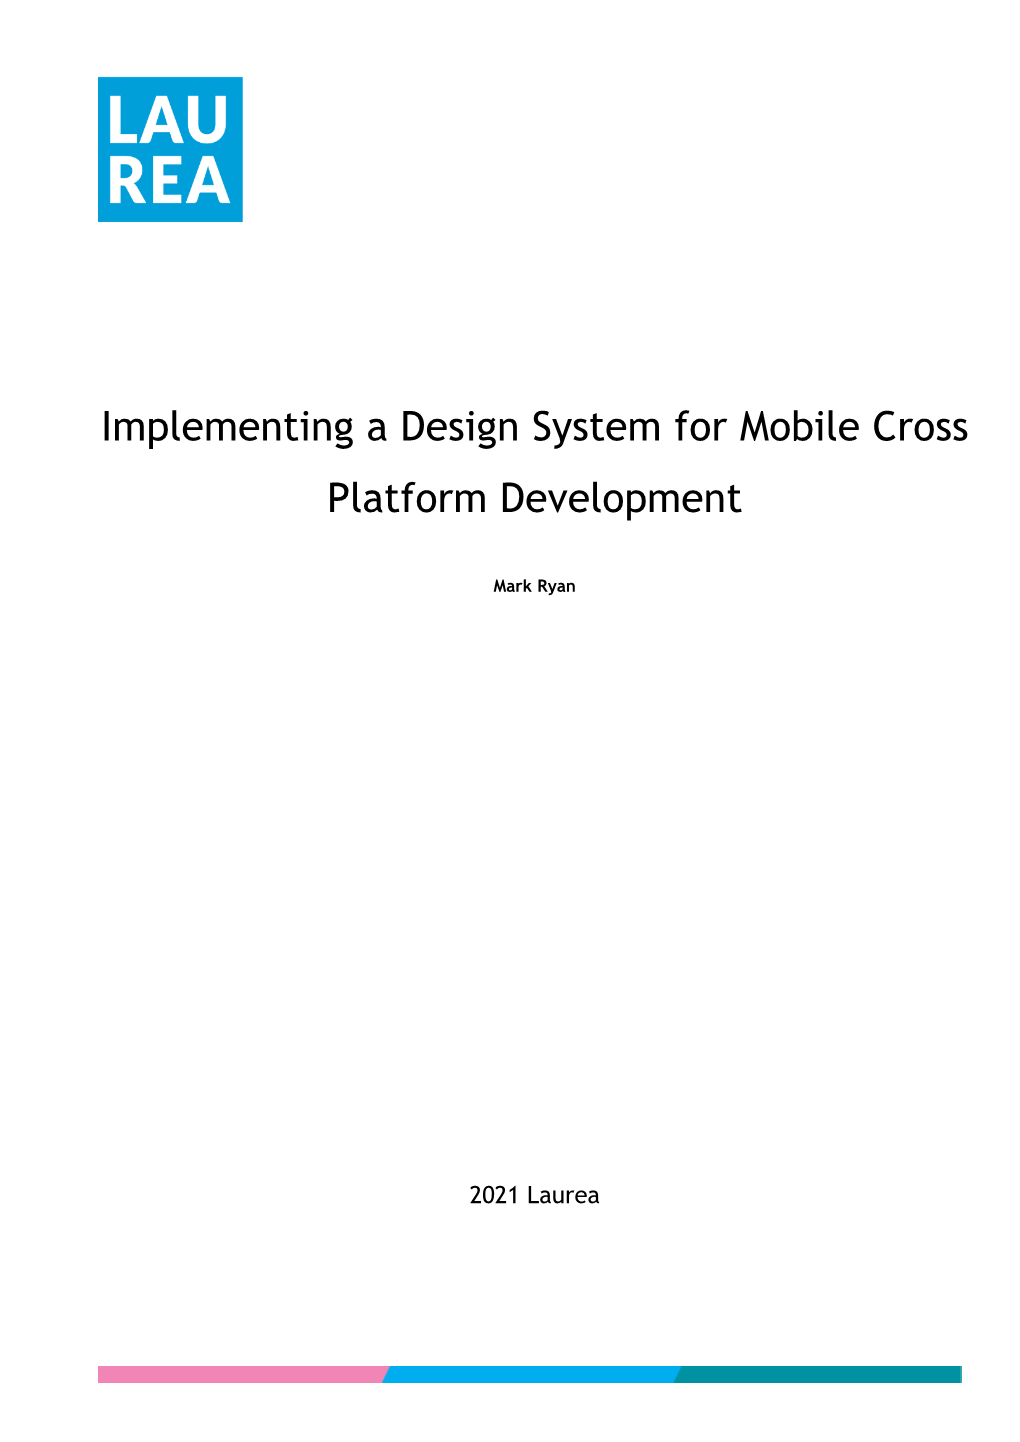 Implementing a Design System for Mobile Cross Platform Development